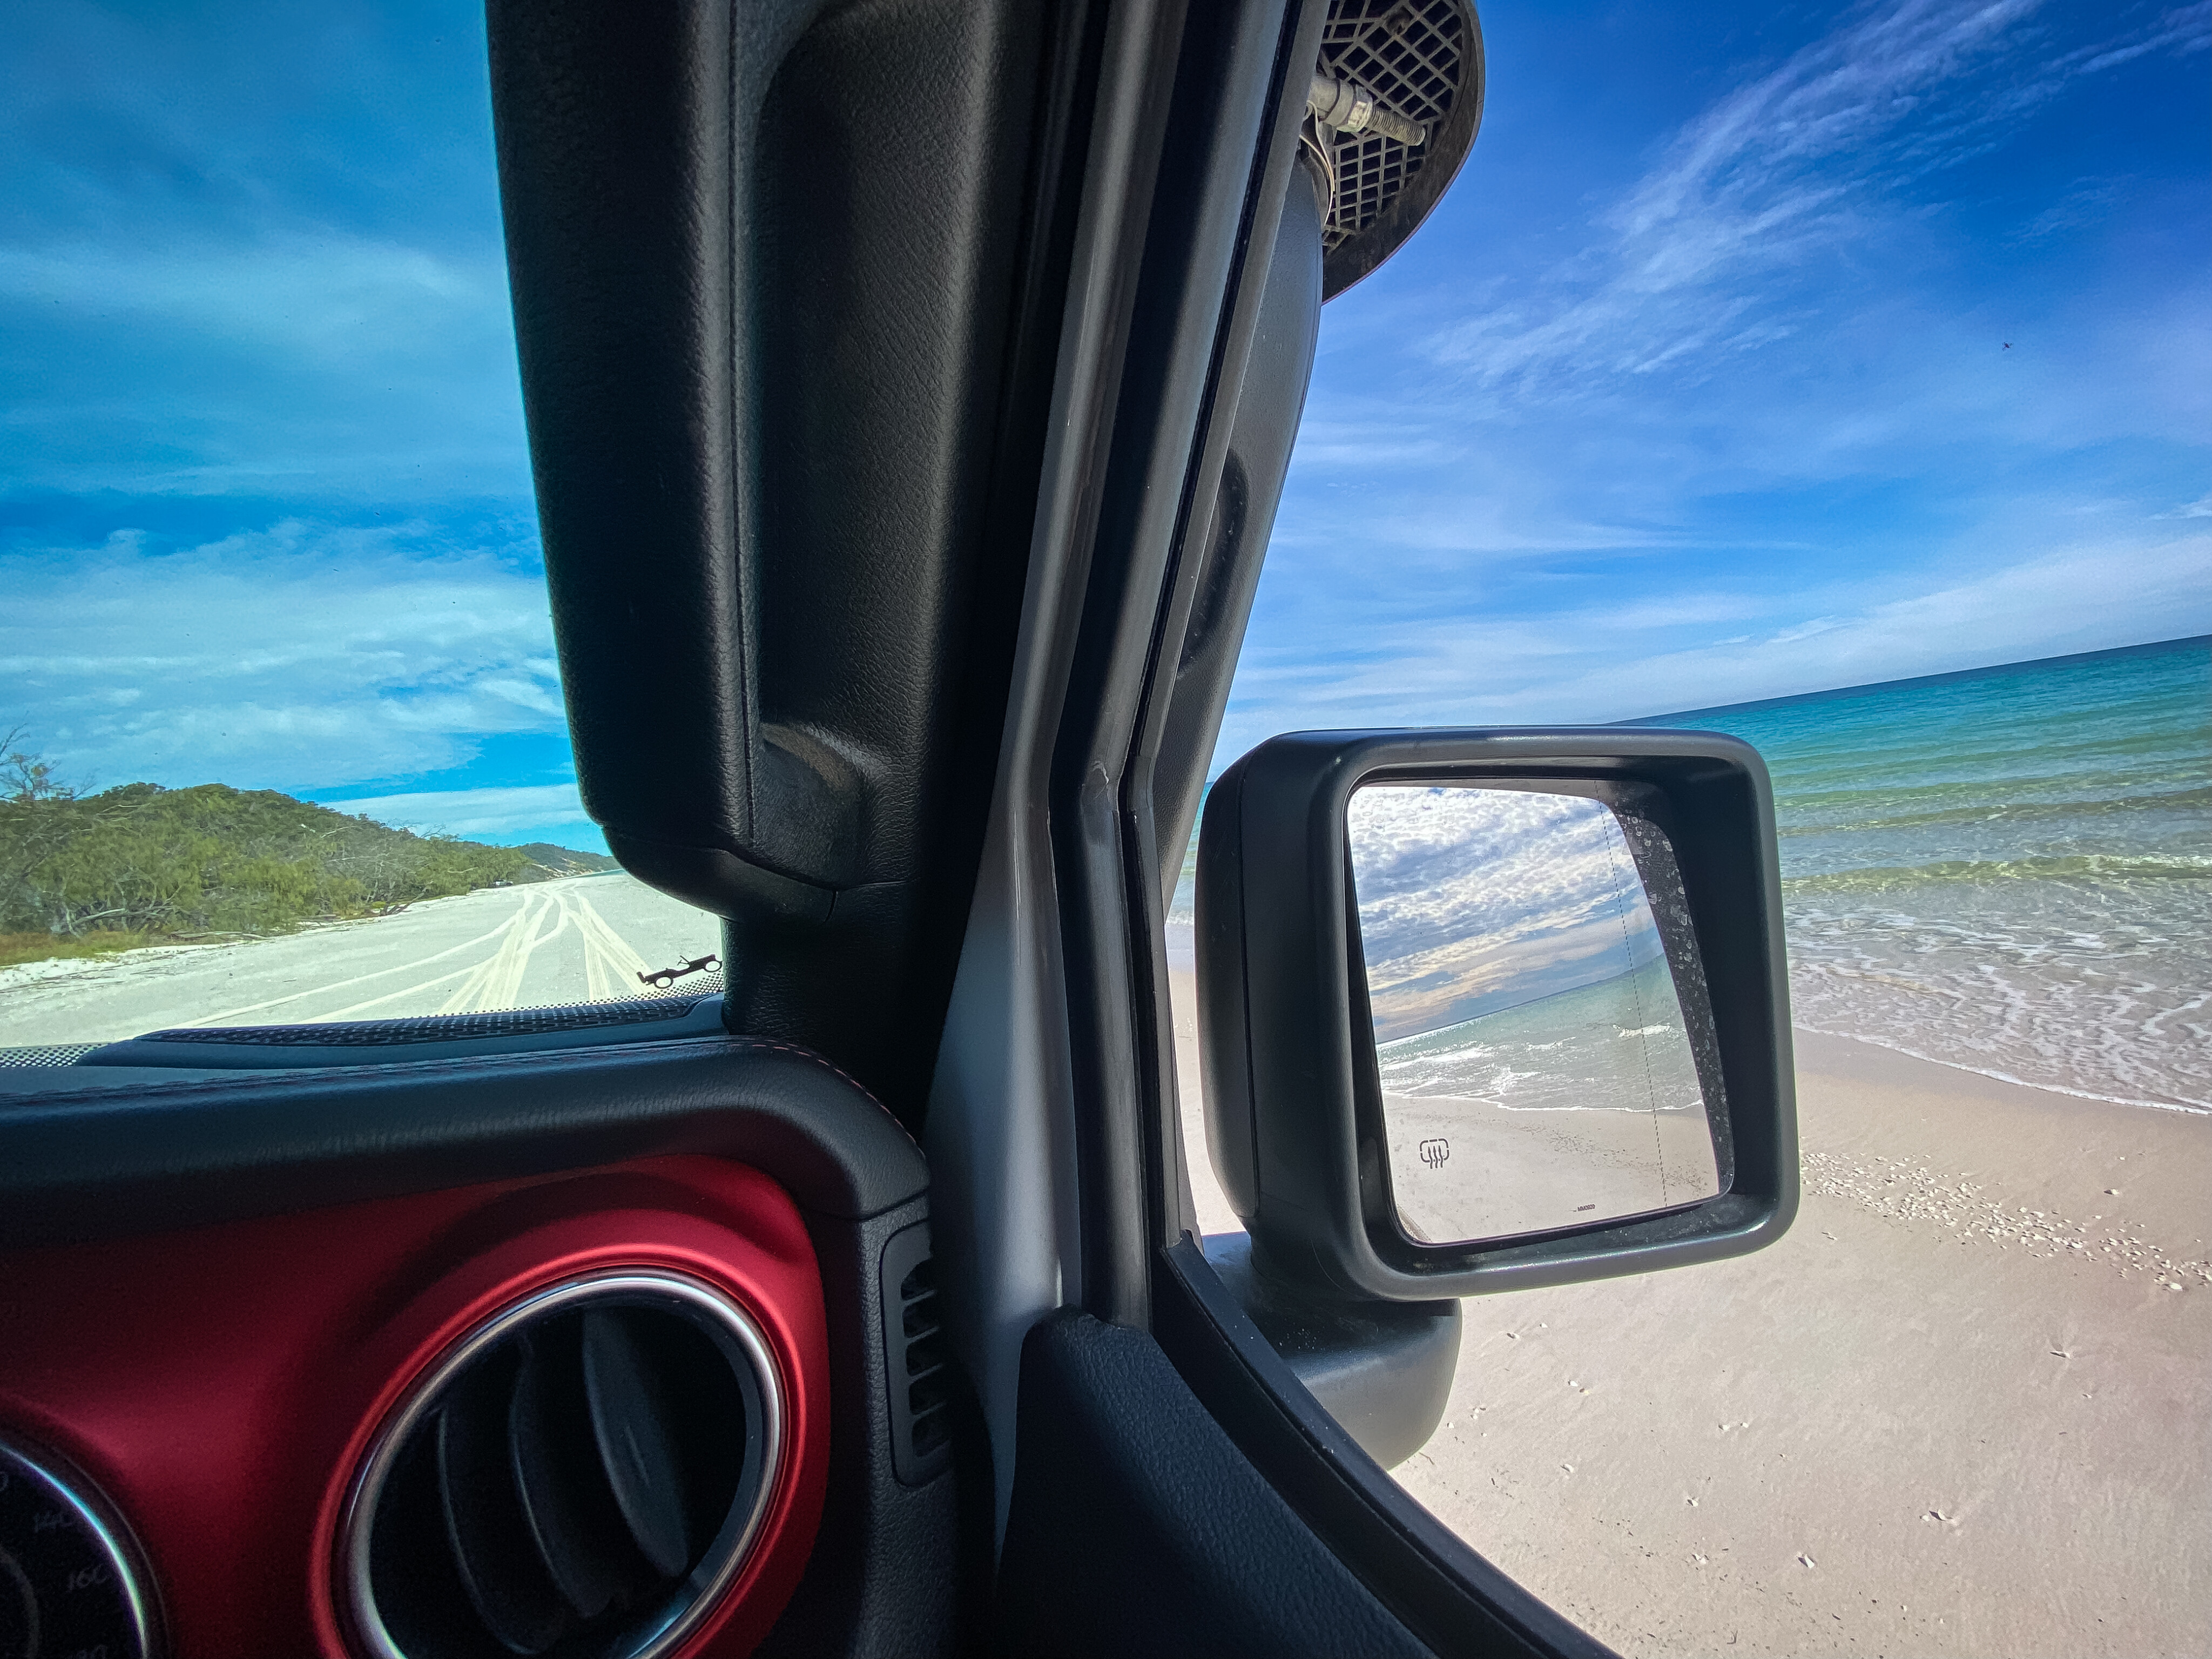 dfcb1fc3/trcm fraser island jeep beach viewk gari explore 4x4 australia jpg